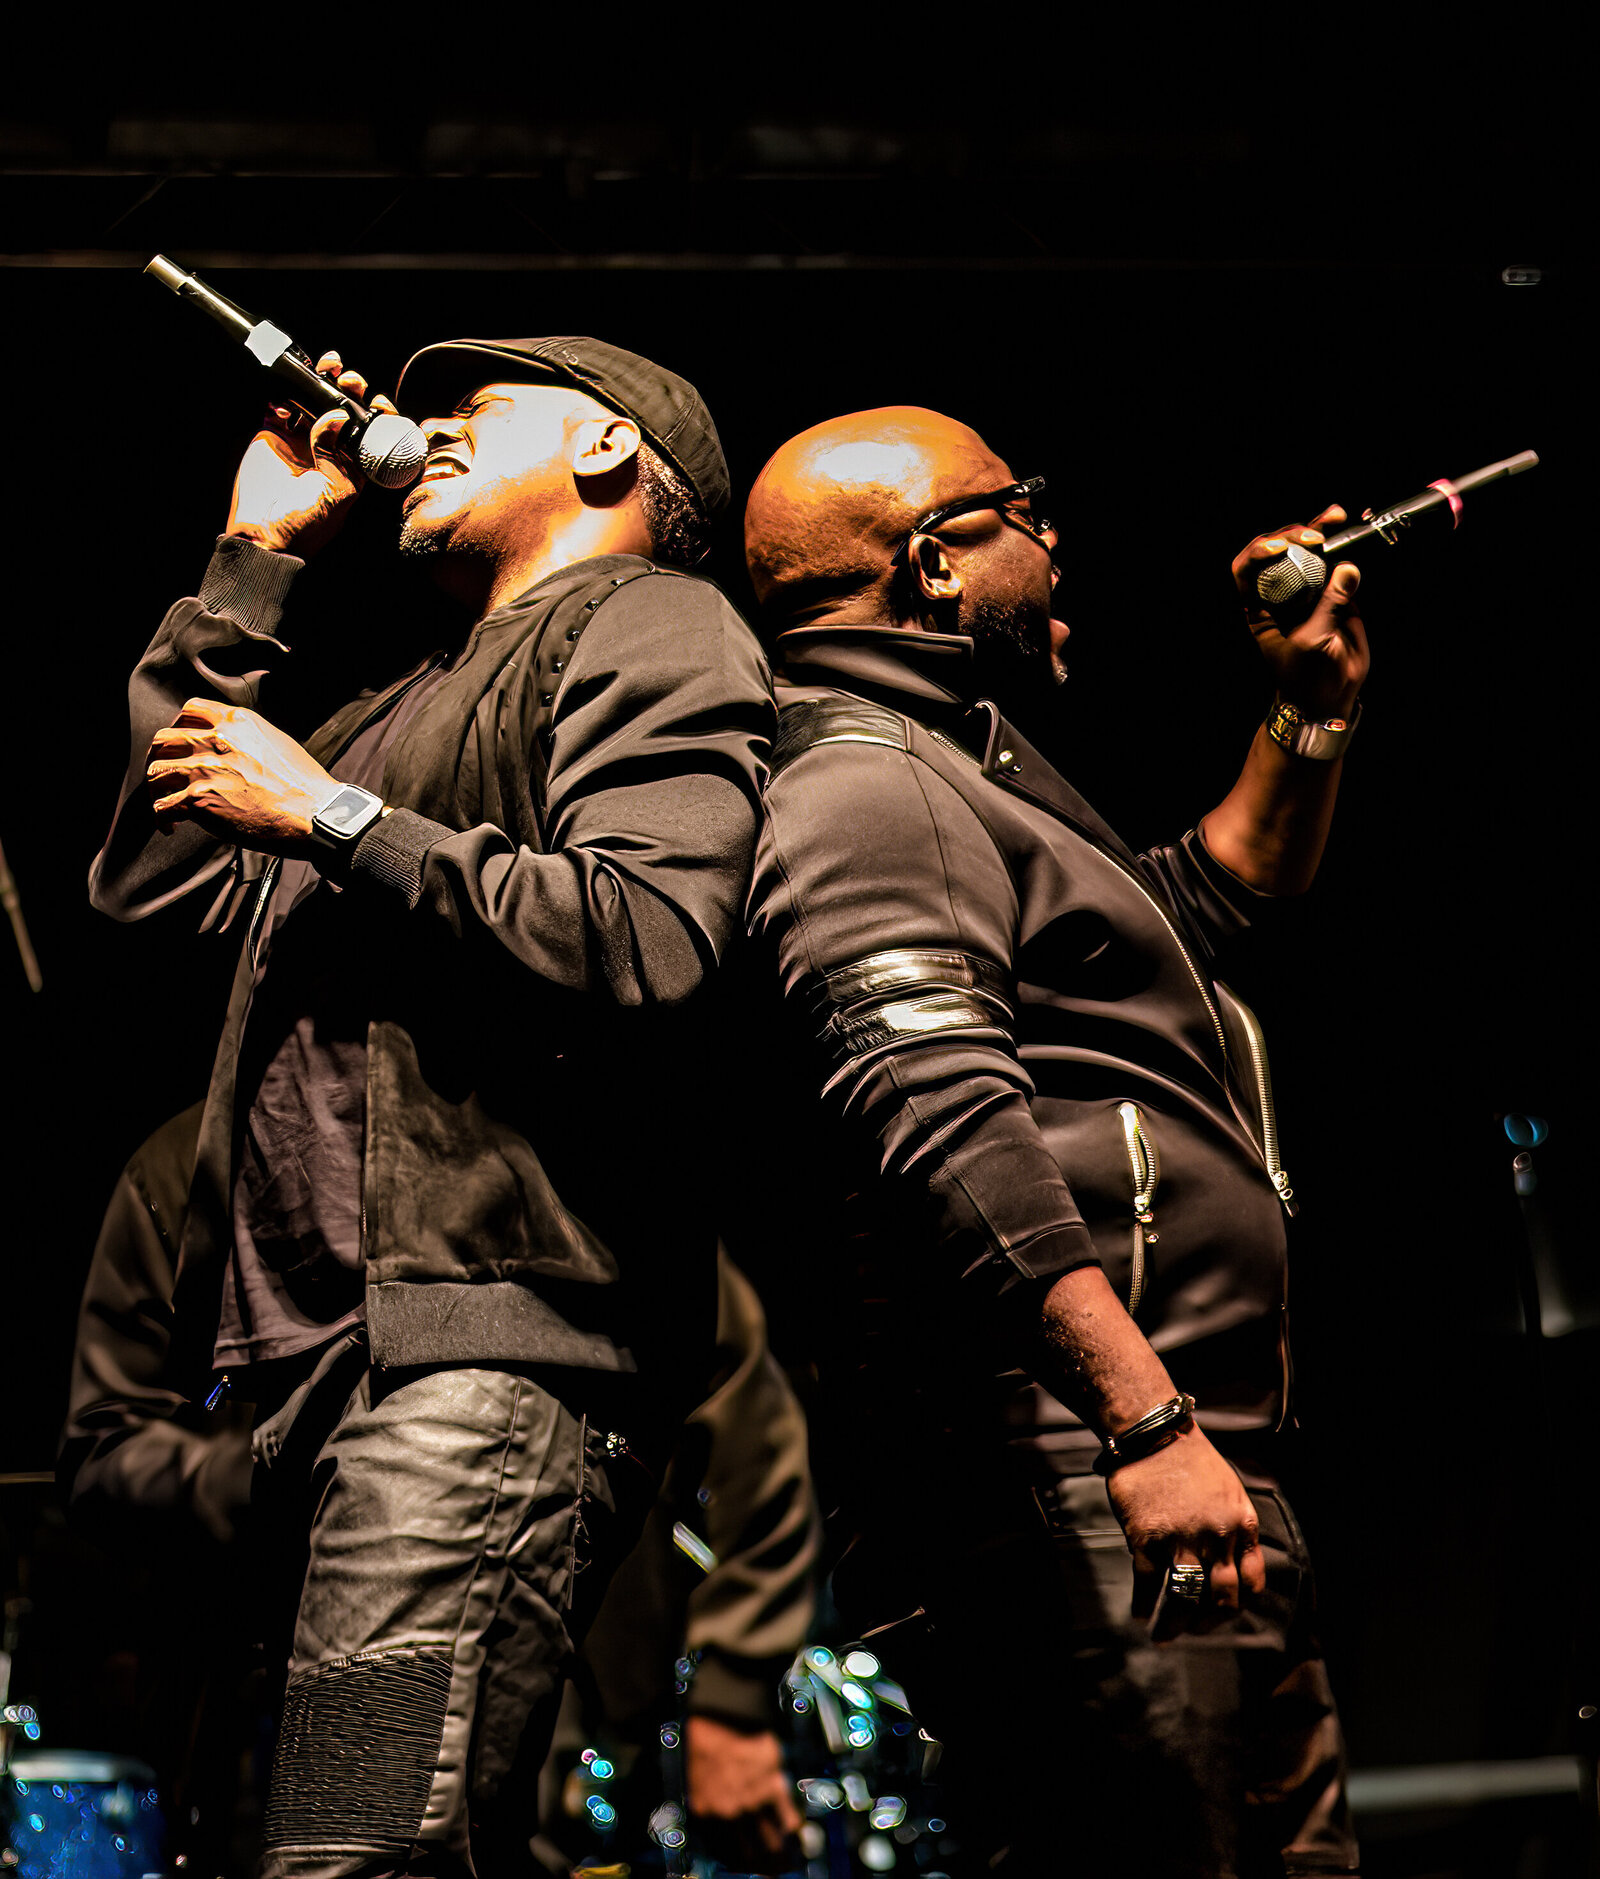 Lil G & John John of Silk singing during a concert